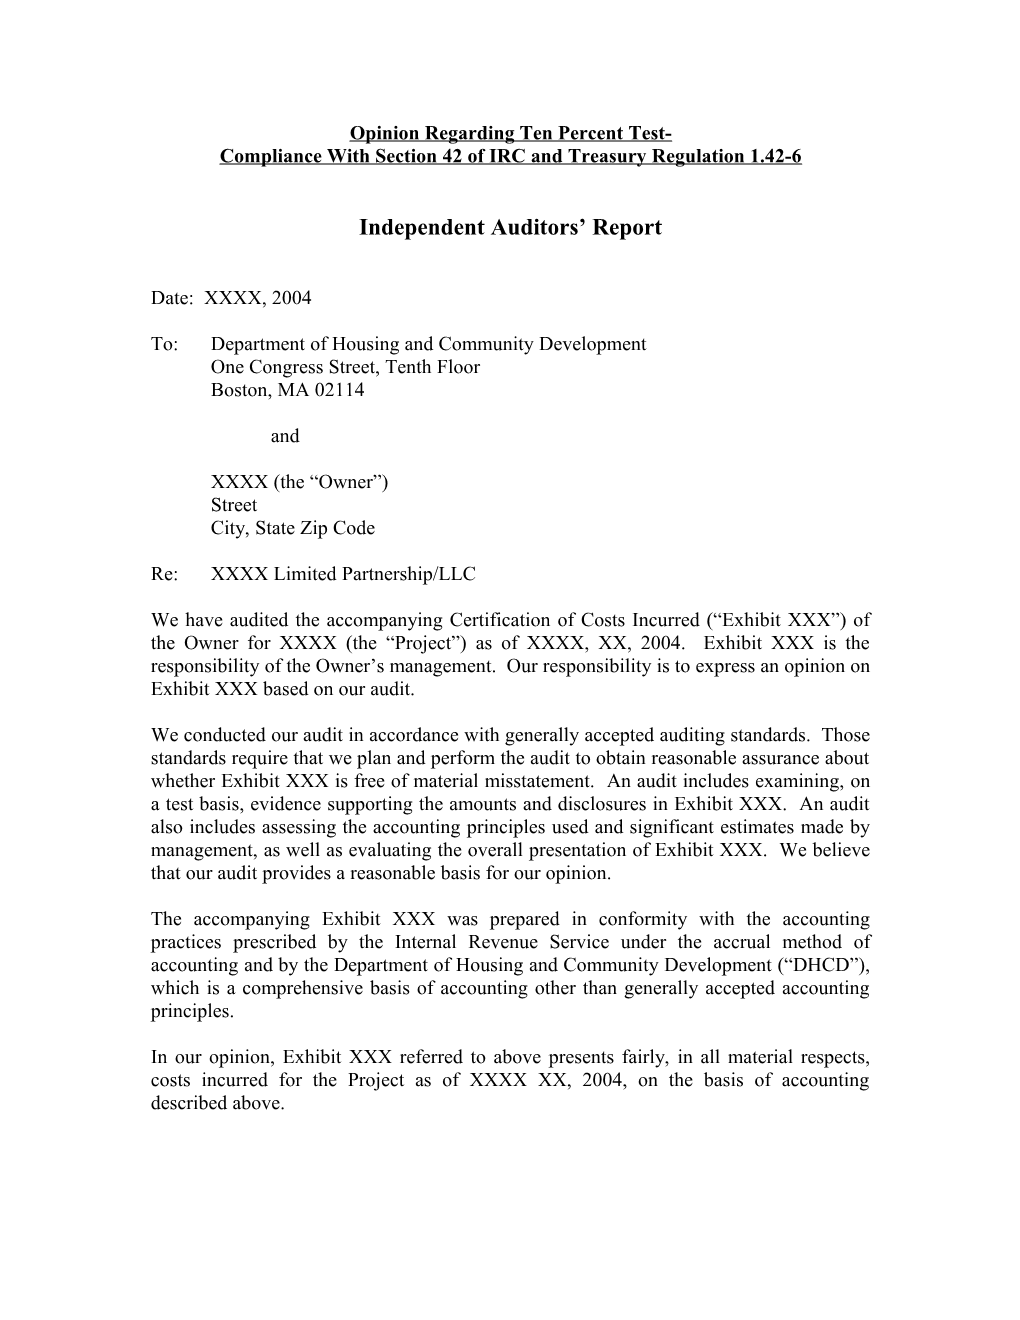 Independent Auditors Report